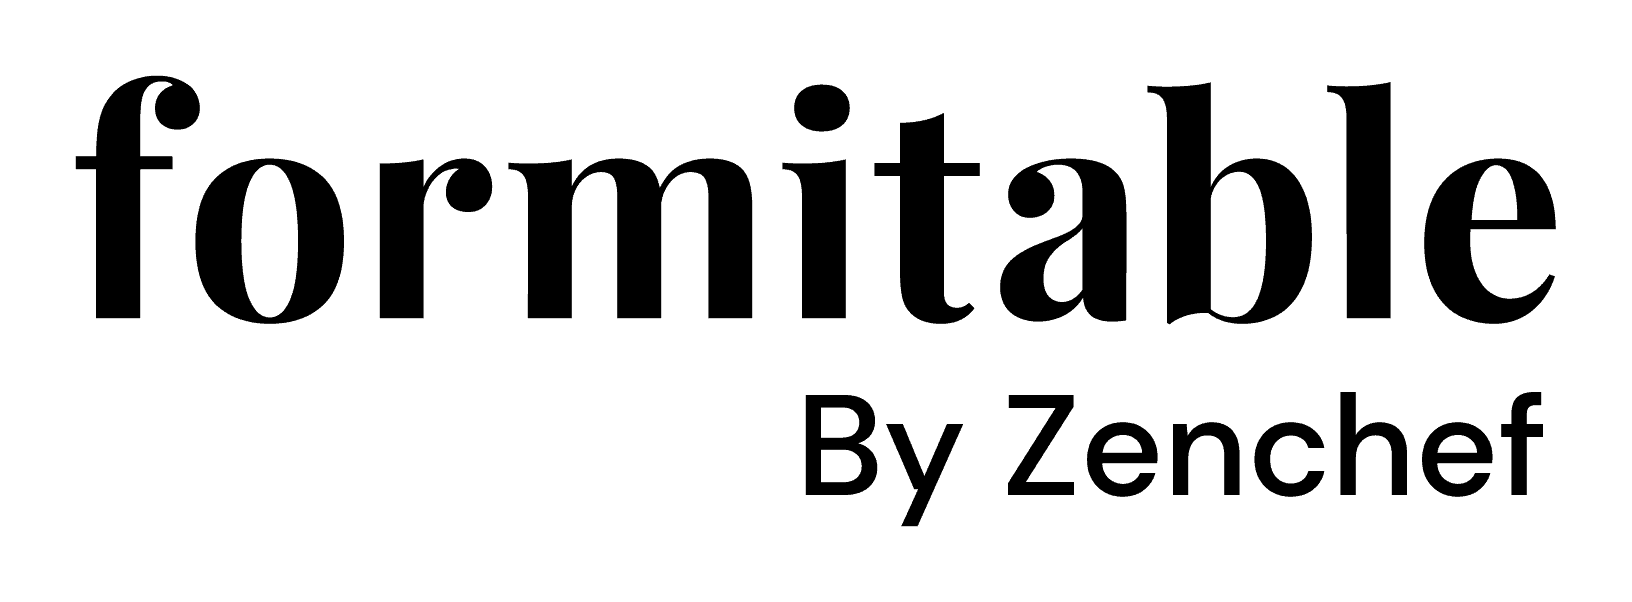 Danløn logo